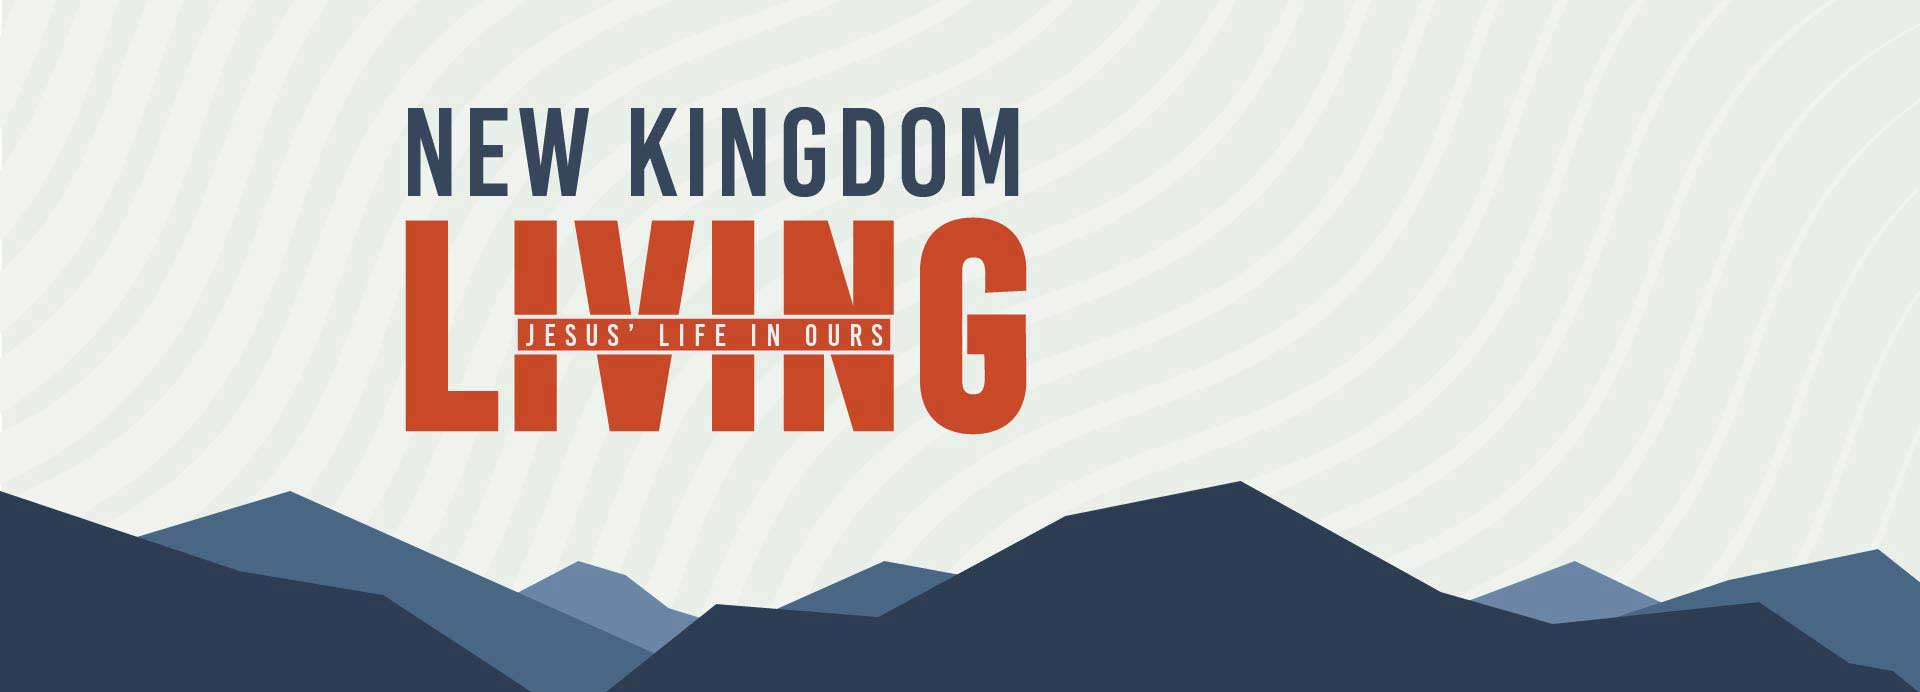 New Kingdom Living